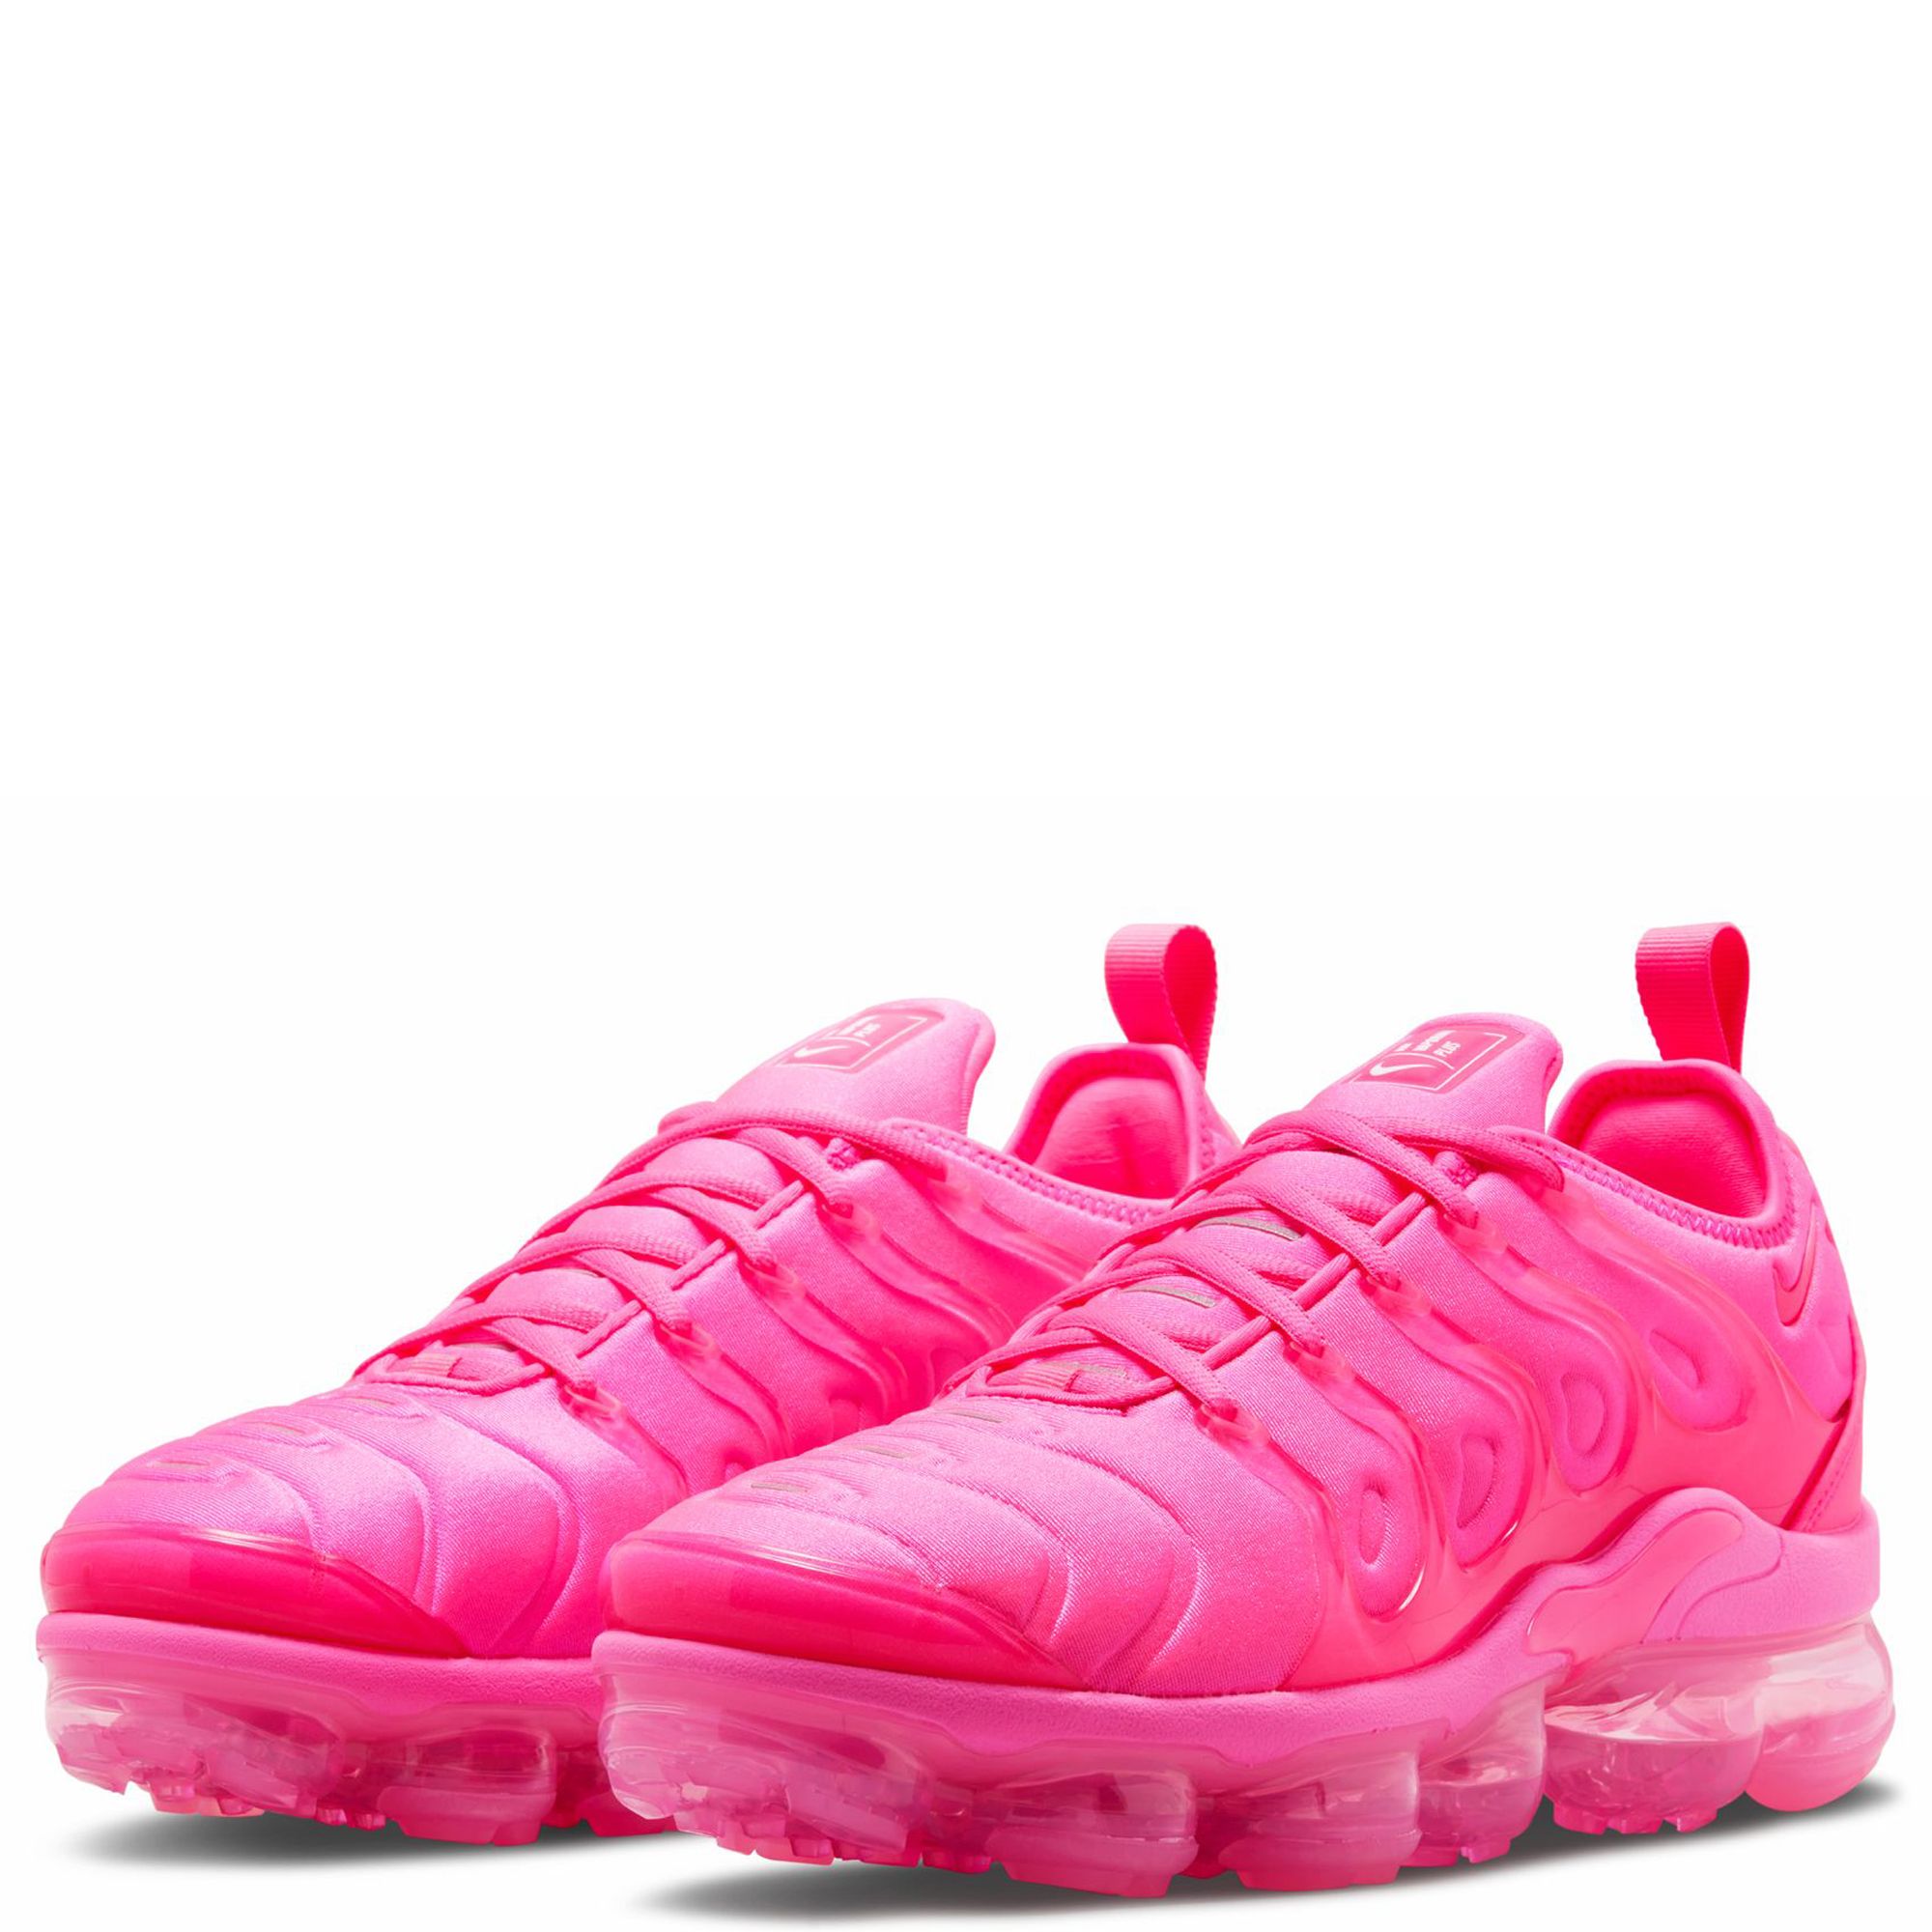 Nike, Shoes, Nike Air Vapormax Plus Pink Oxford Metallic Silver